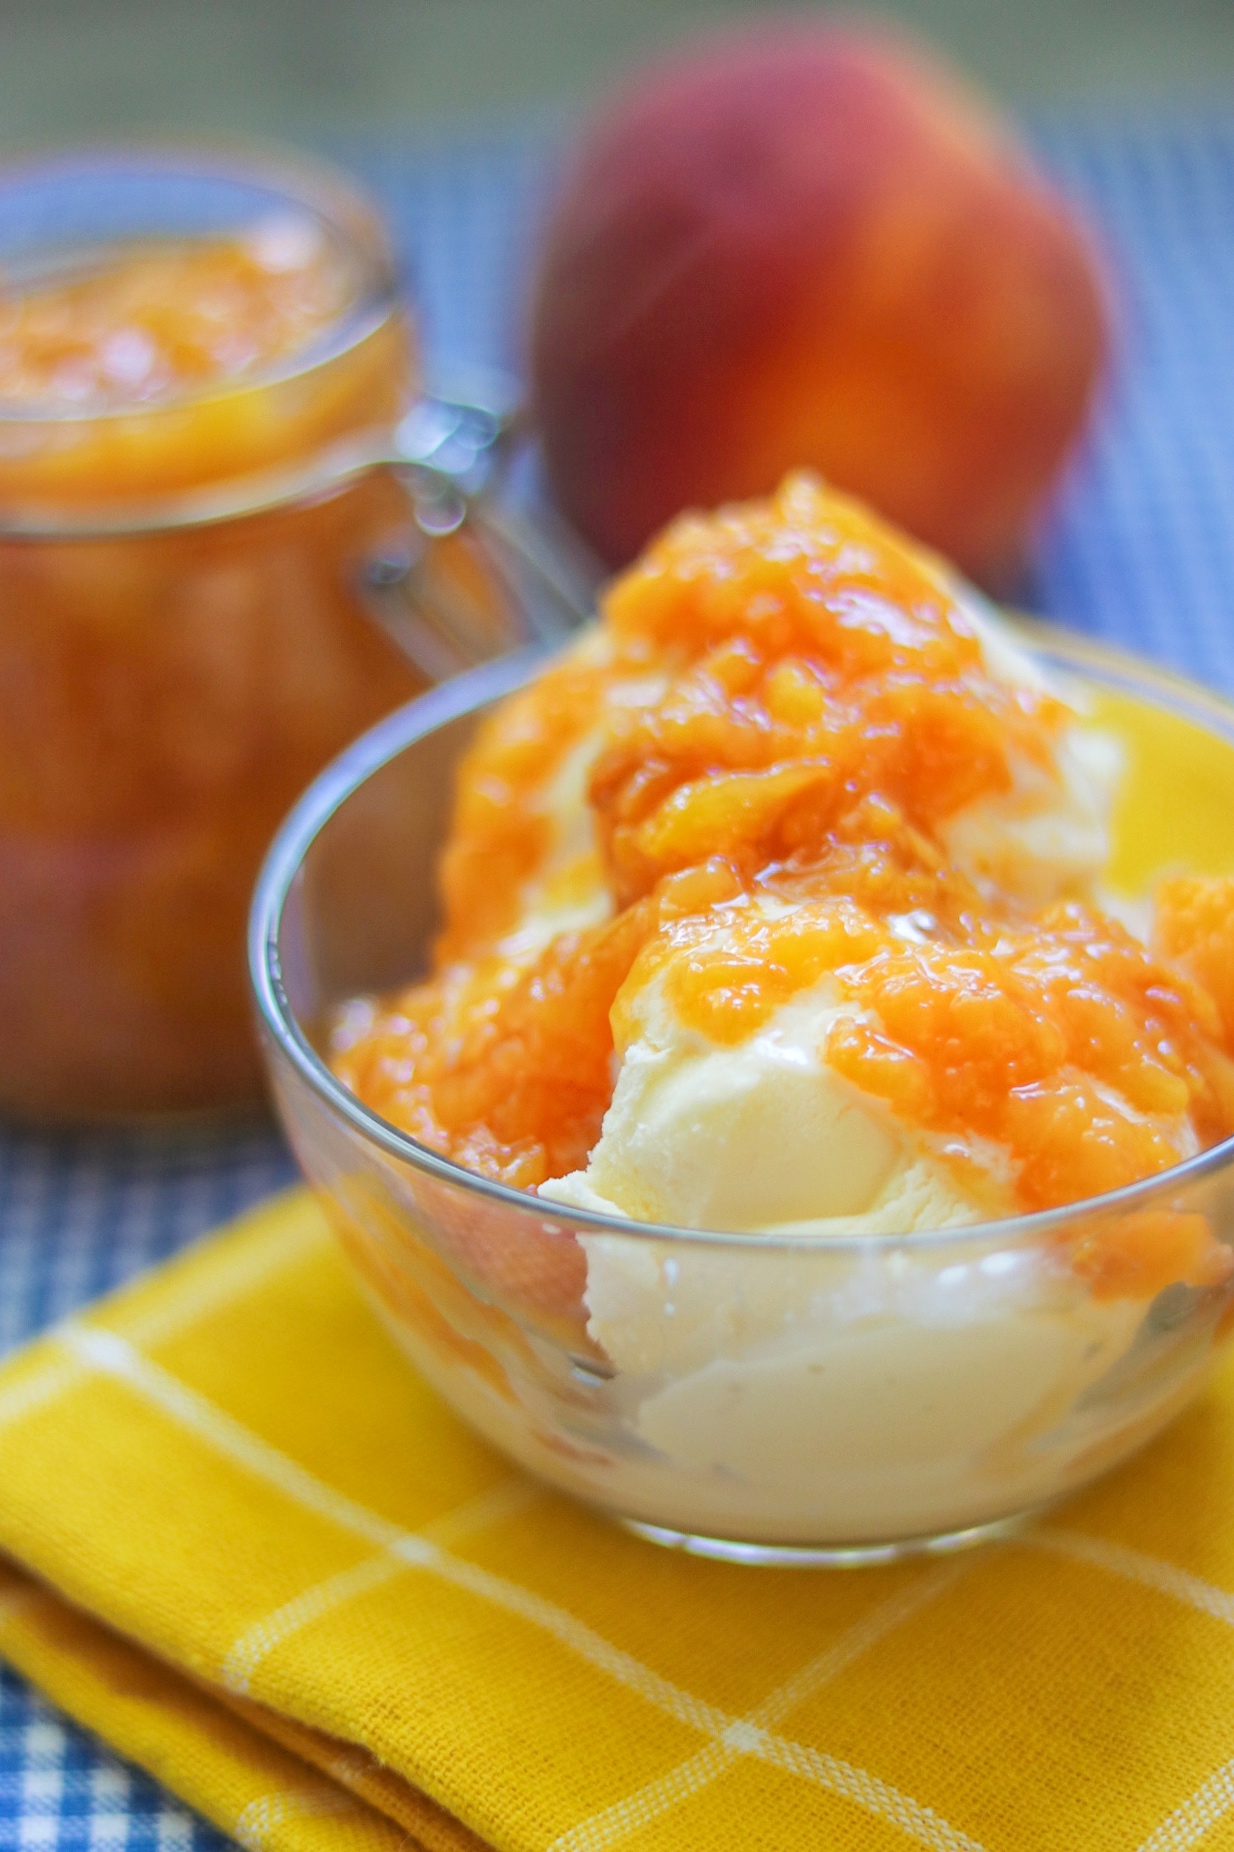 Instant Pot peach recipes: Instant Pot Peach Compote